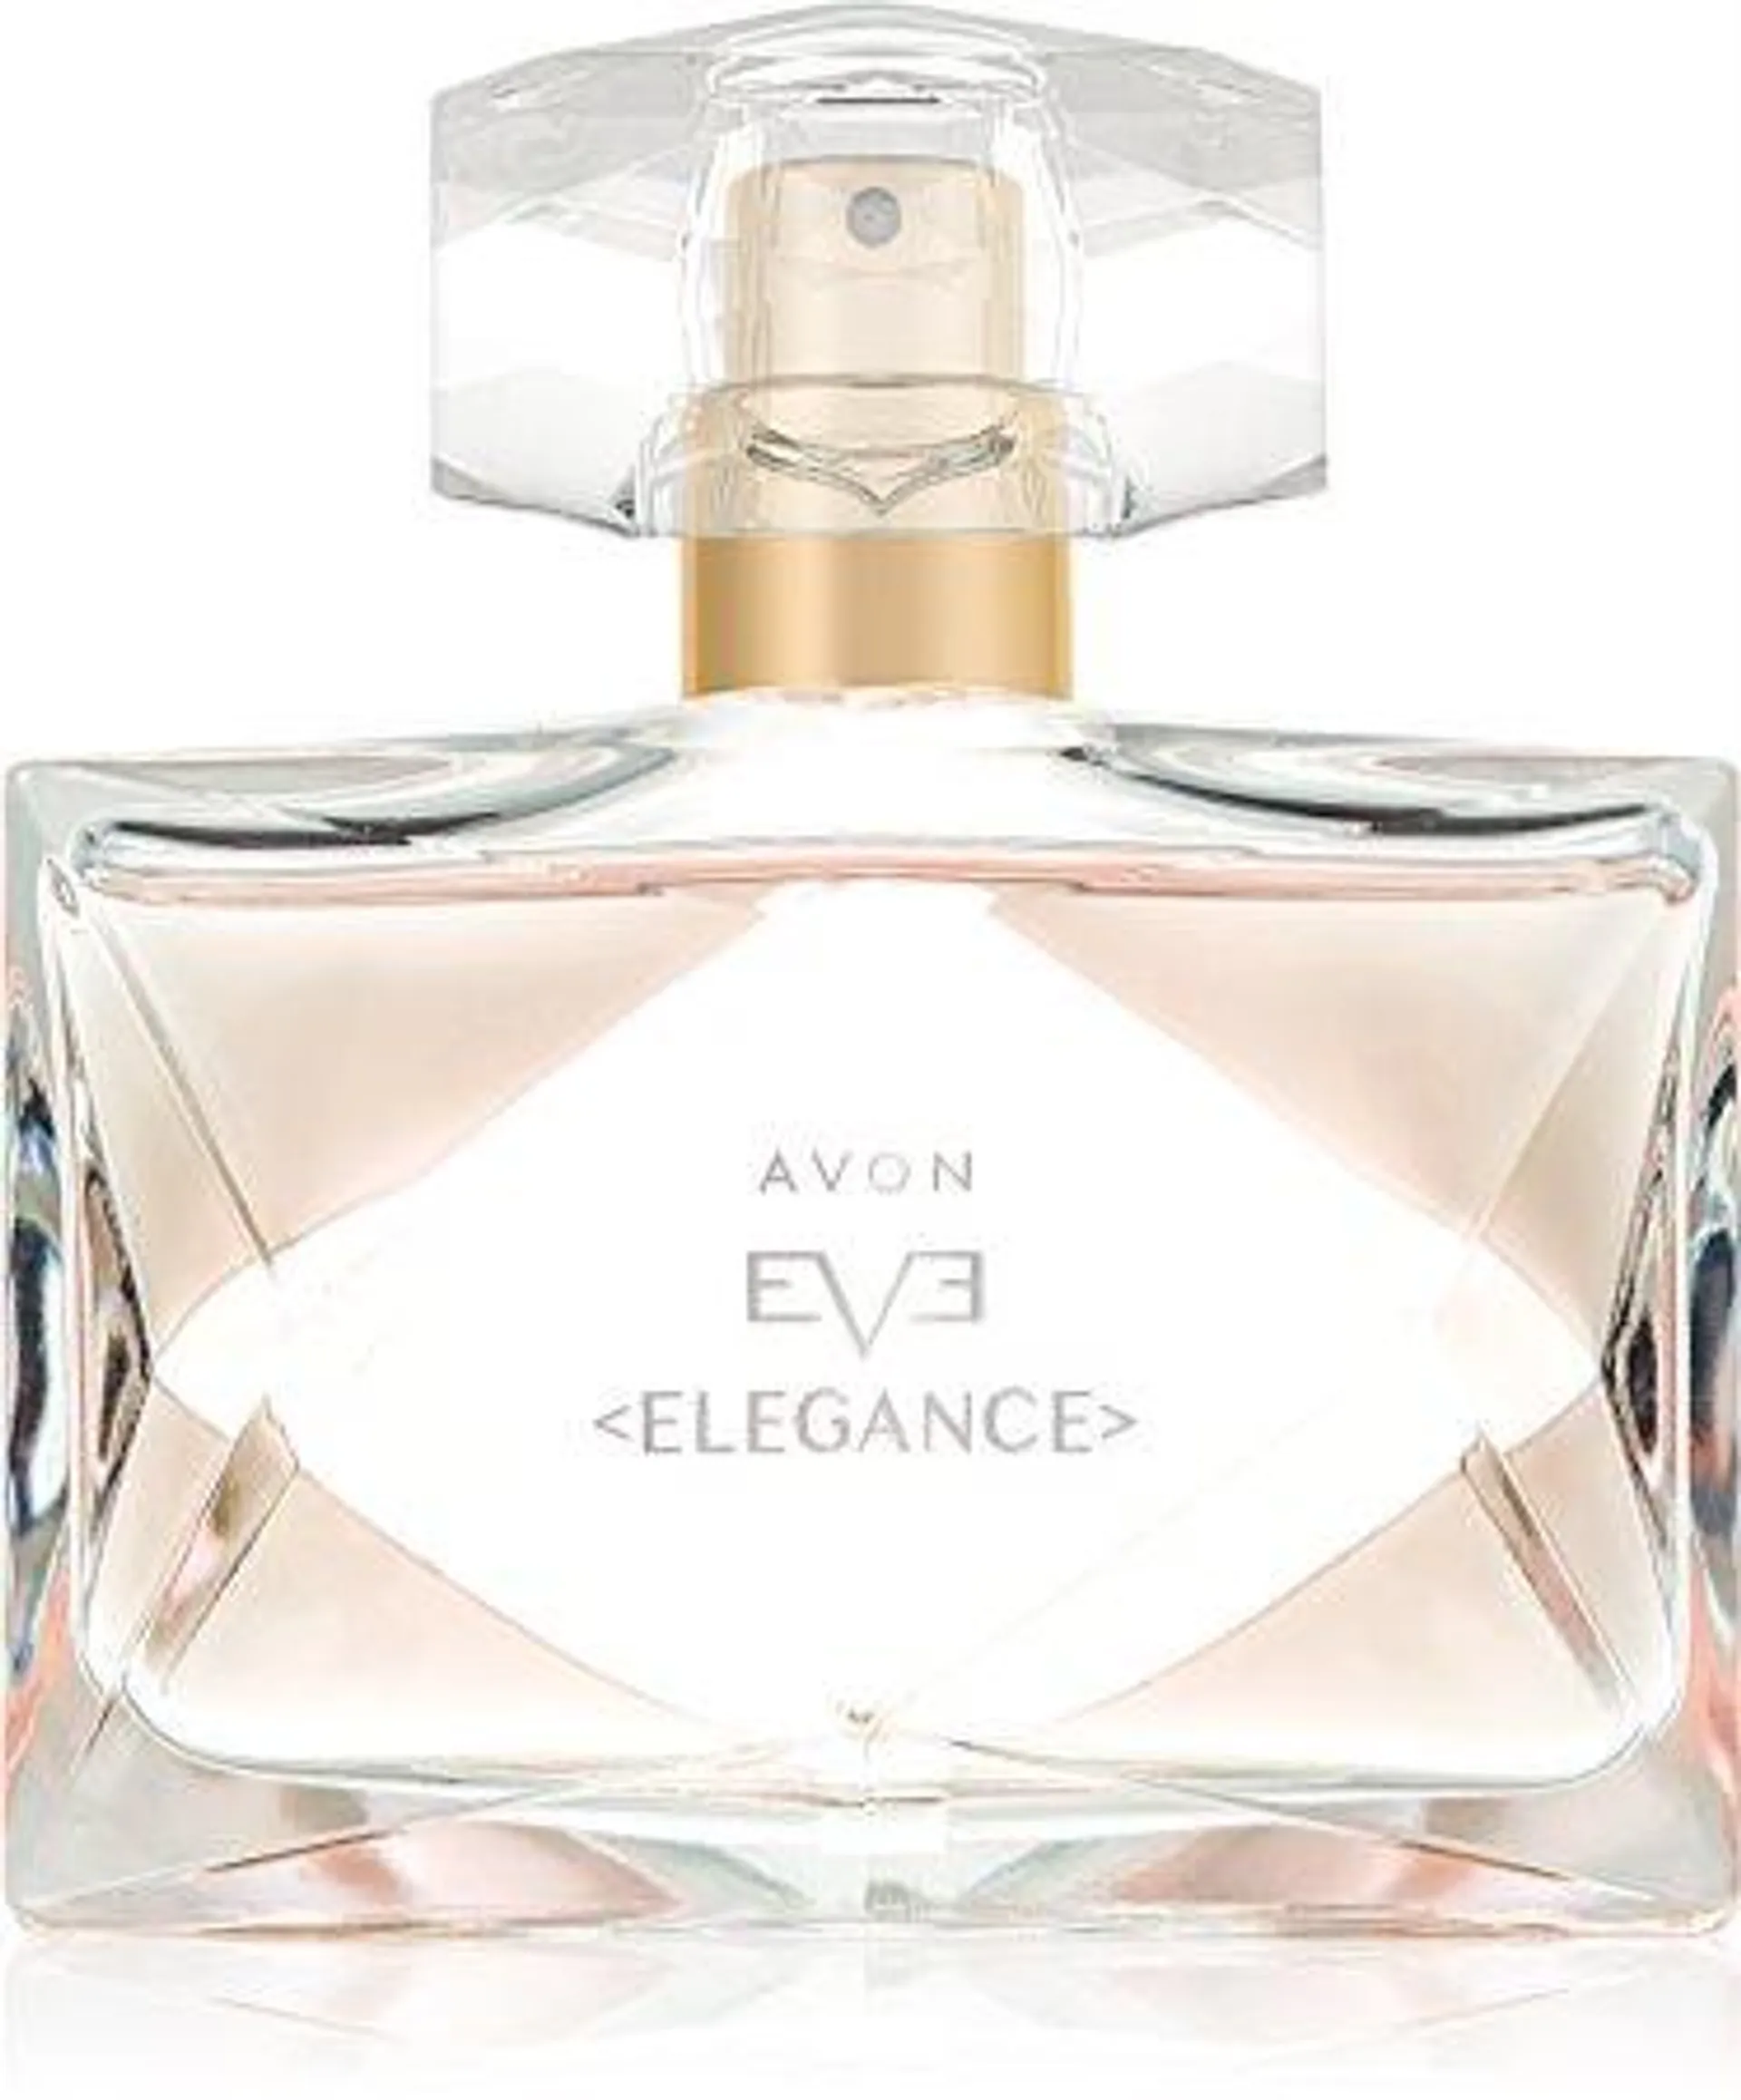 Eve Elegance